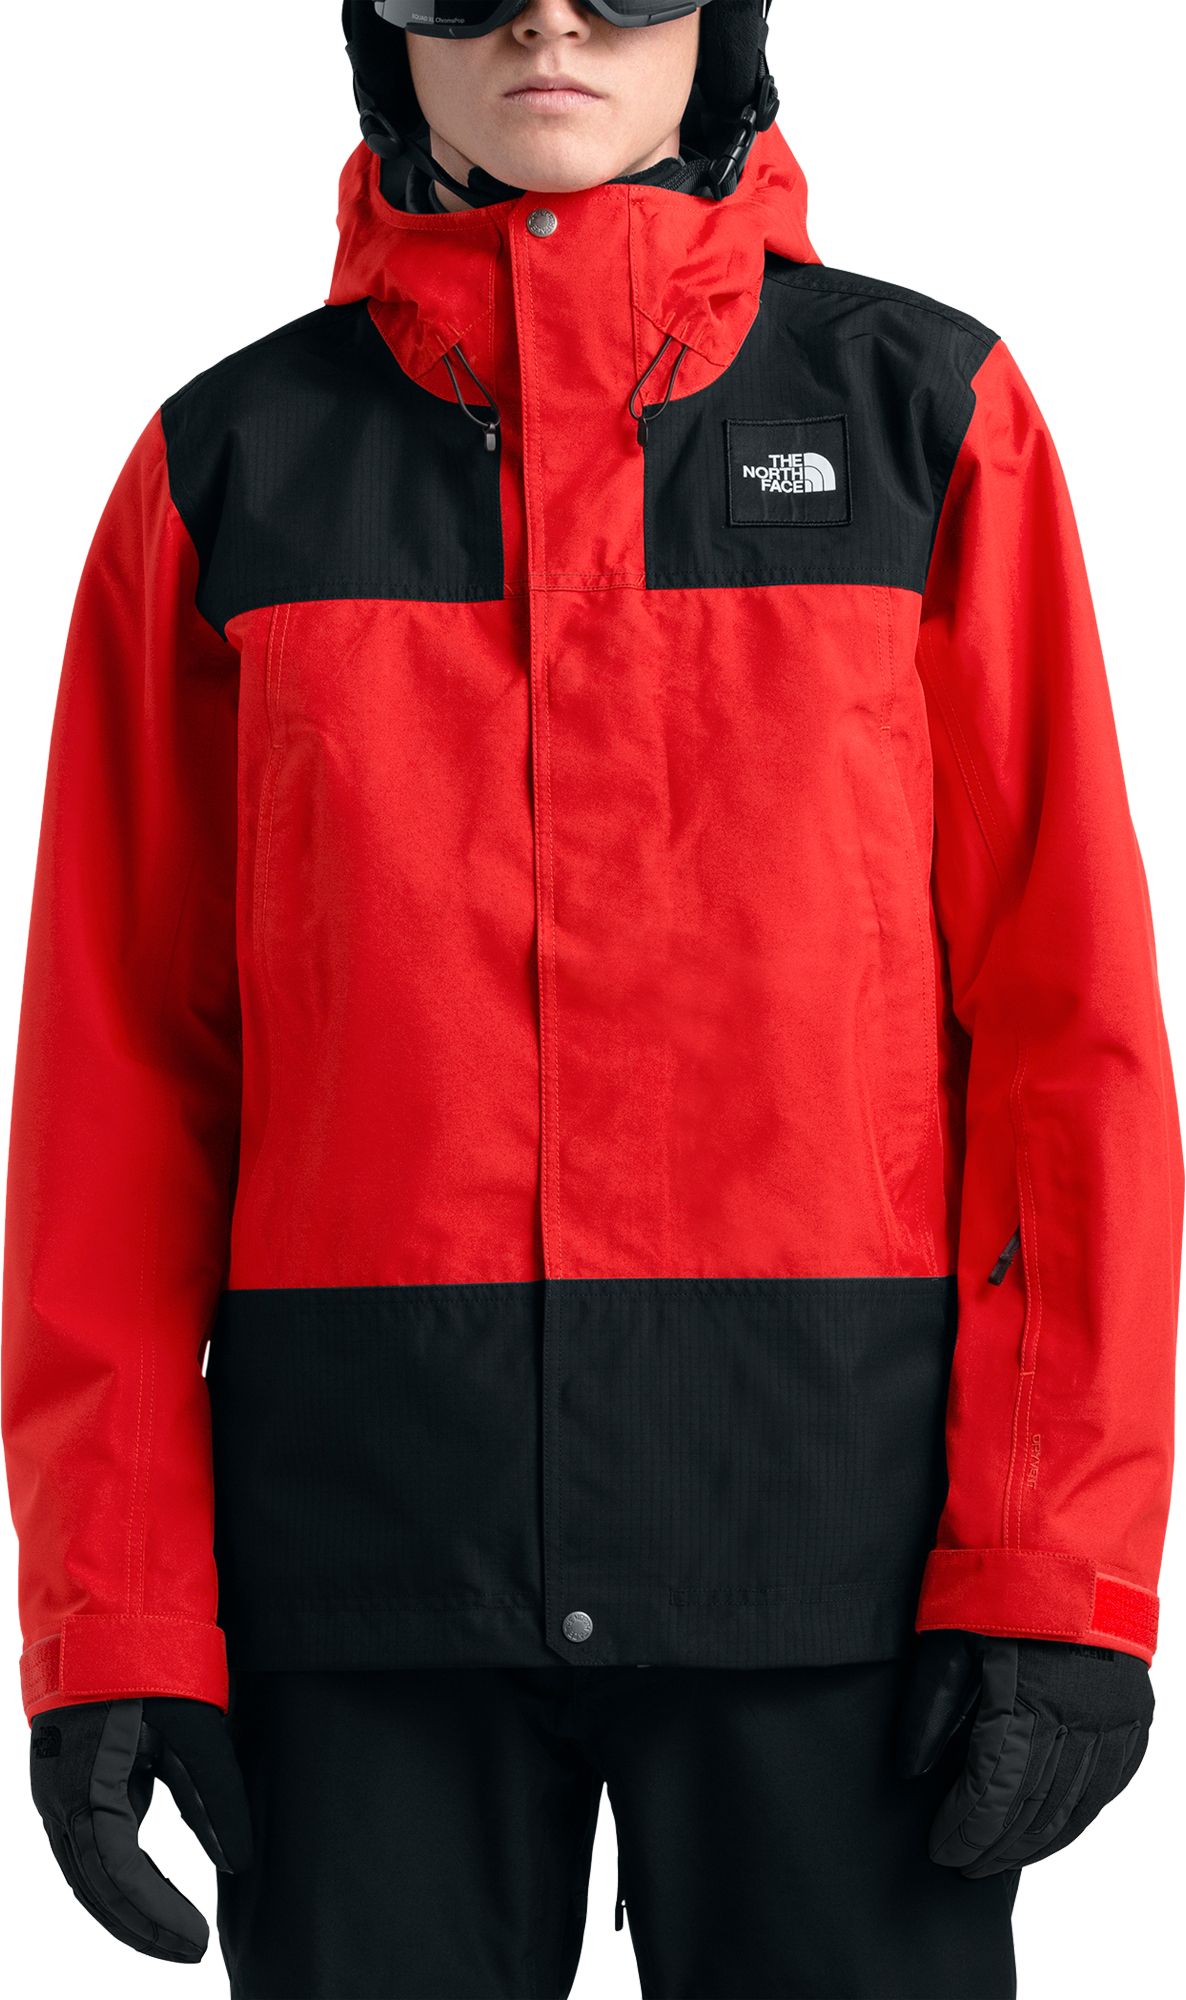 The North Face Men's Drt Ski Jacket - 5.97